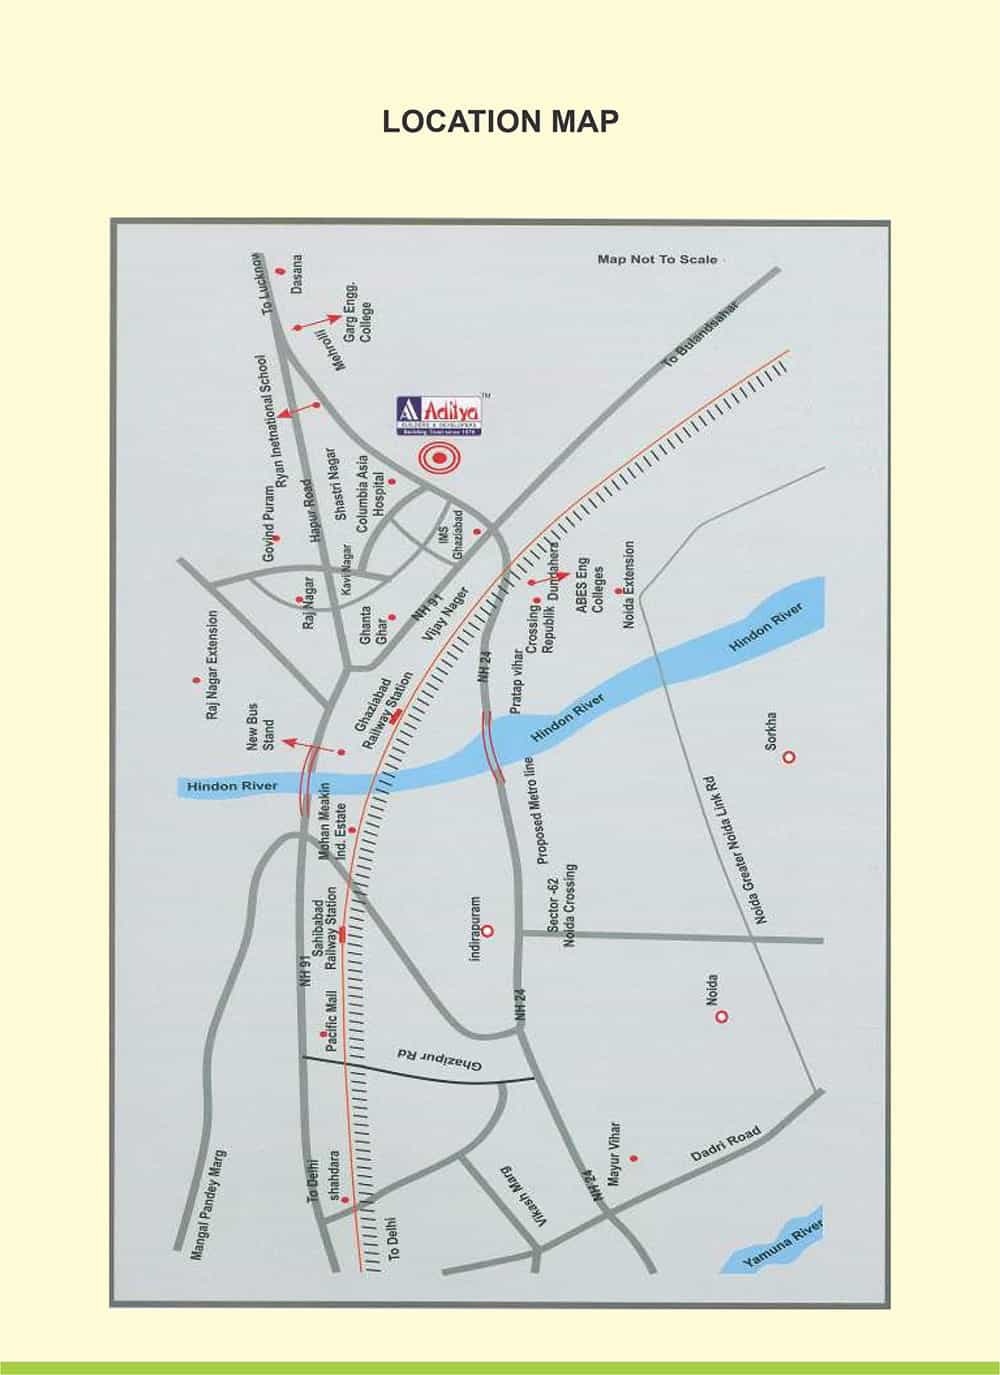 aditya location map